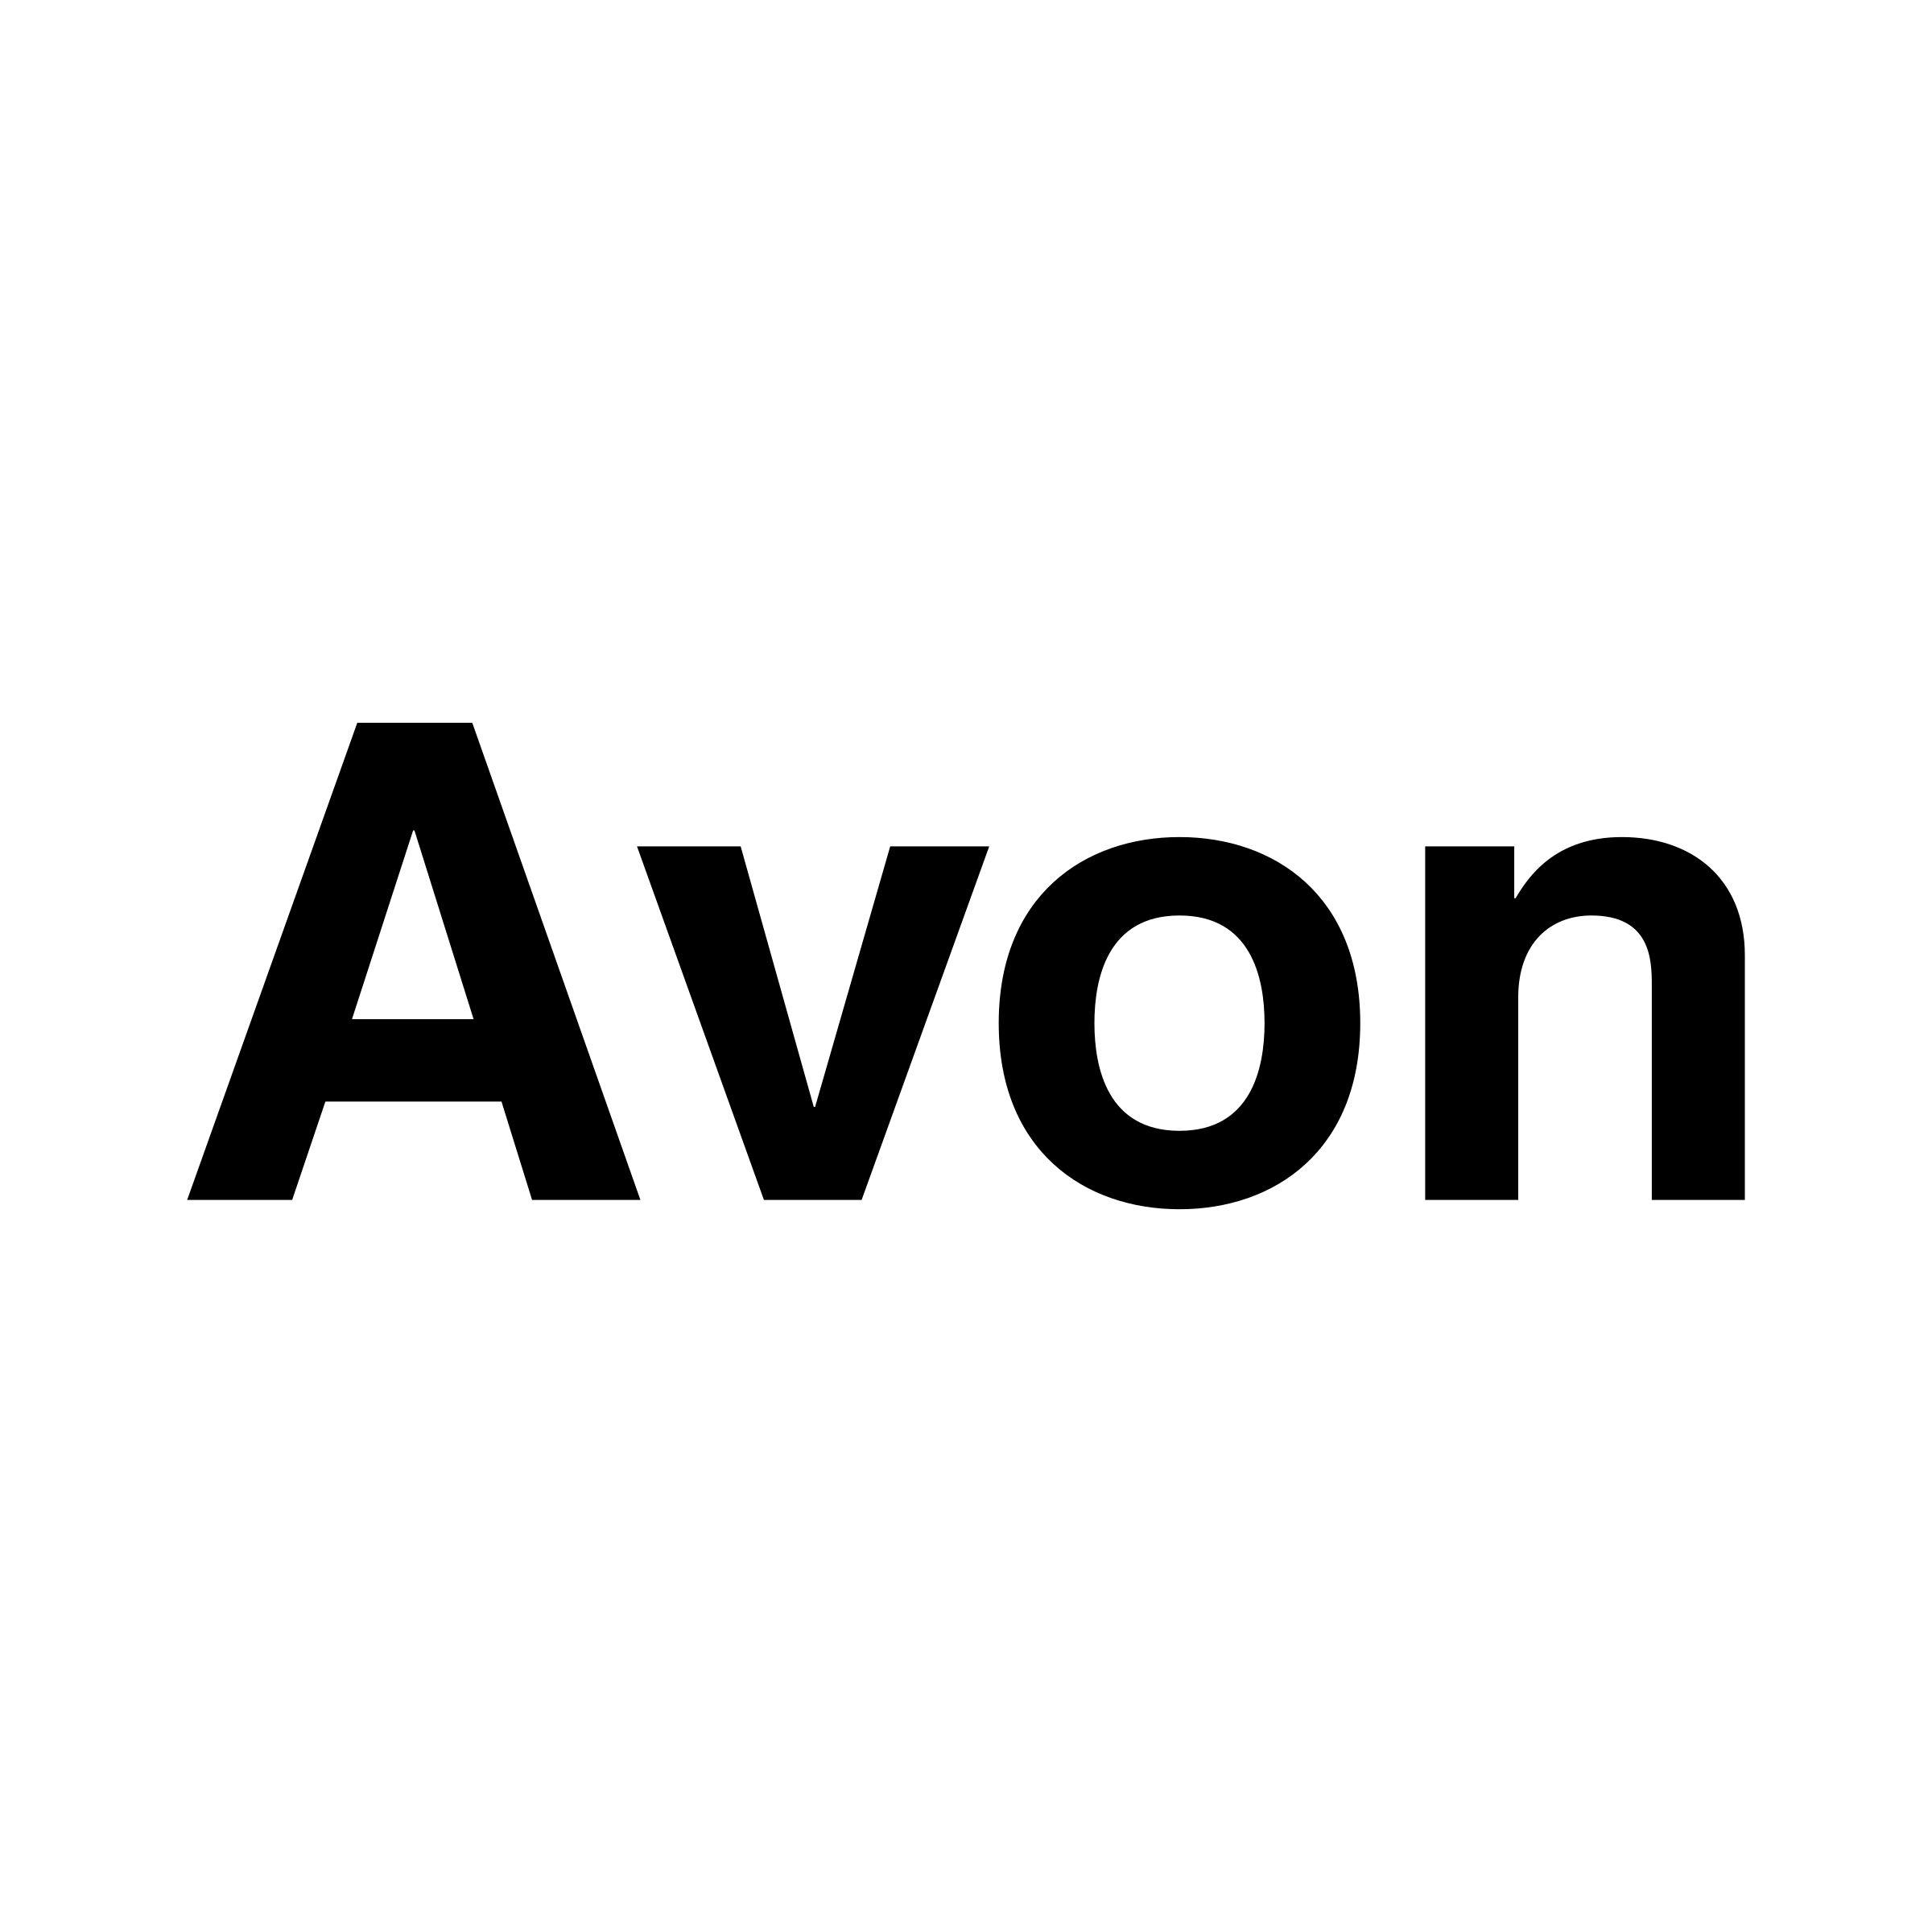 Avon Logo - Avon Logo PNG Transparent & SVG Vector - Freebie Supply